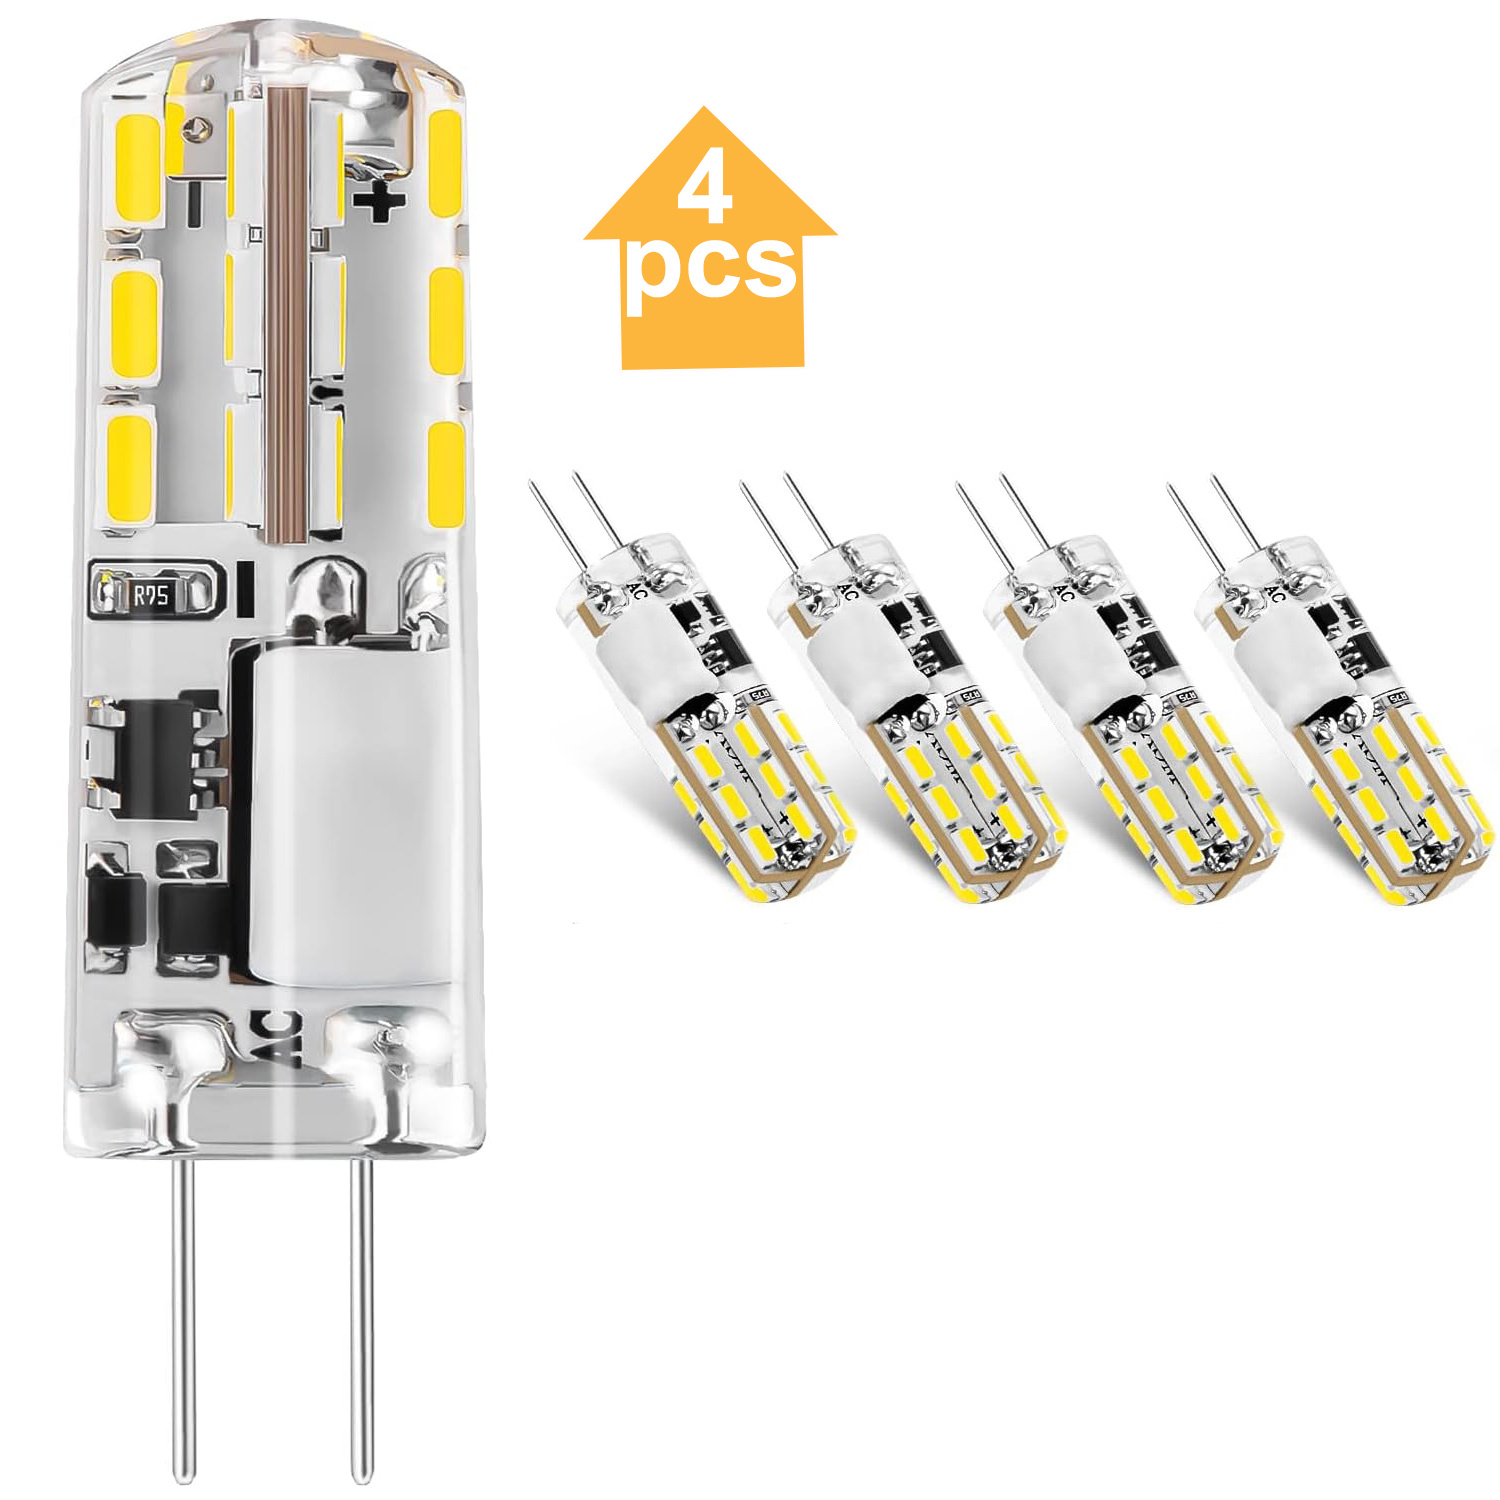 Bombillas LED E26 de bajo voltaje de 12 V, blanco cálido, 3000 K, E27  Edison lámpara de base de tornillo estándar 3W 12-24V 35W equivalente  halógeno